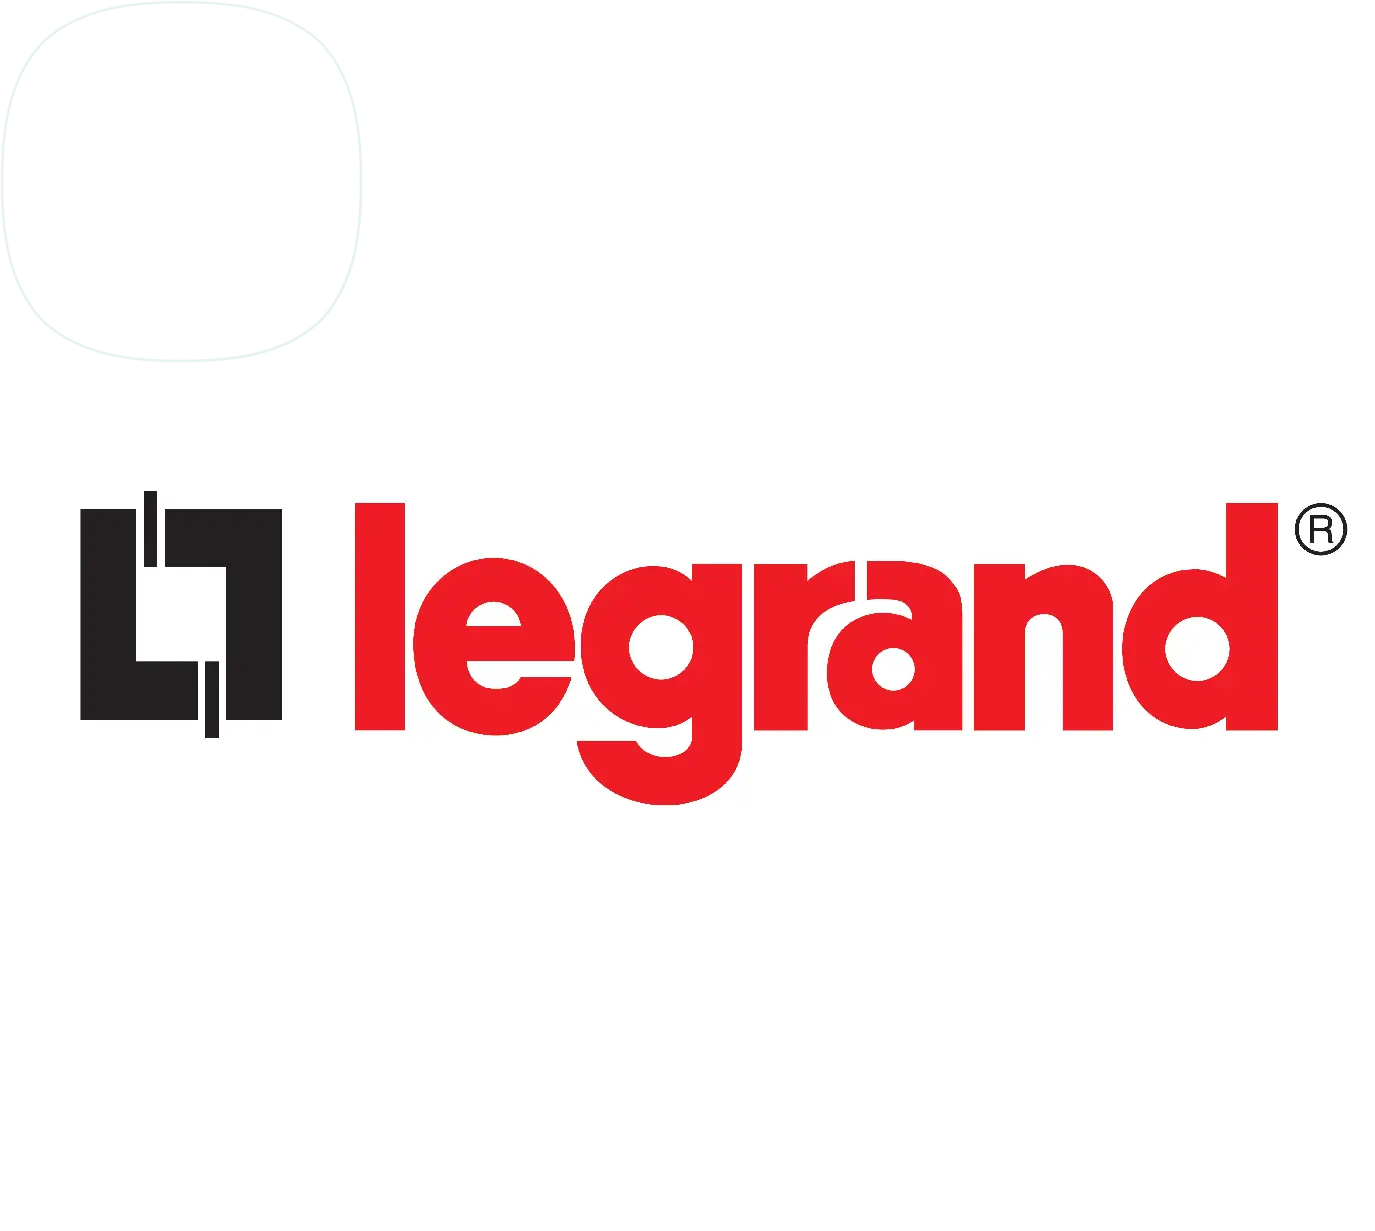 Legrand.